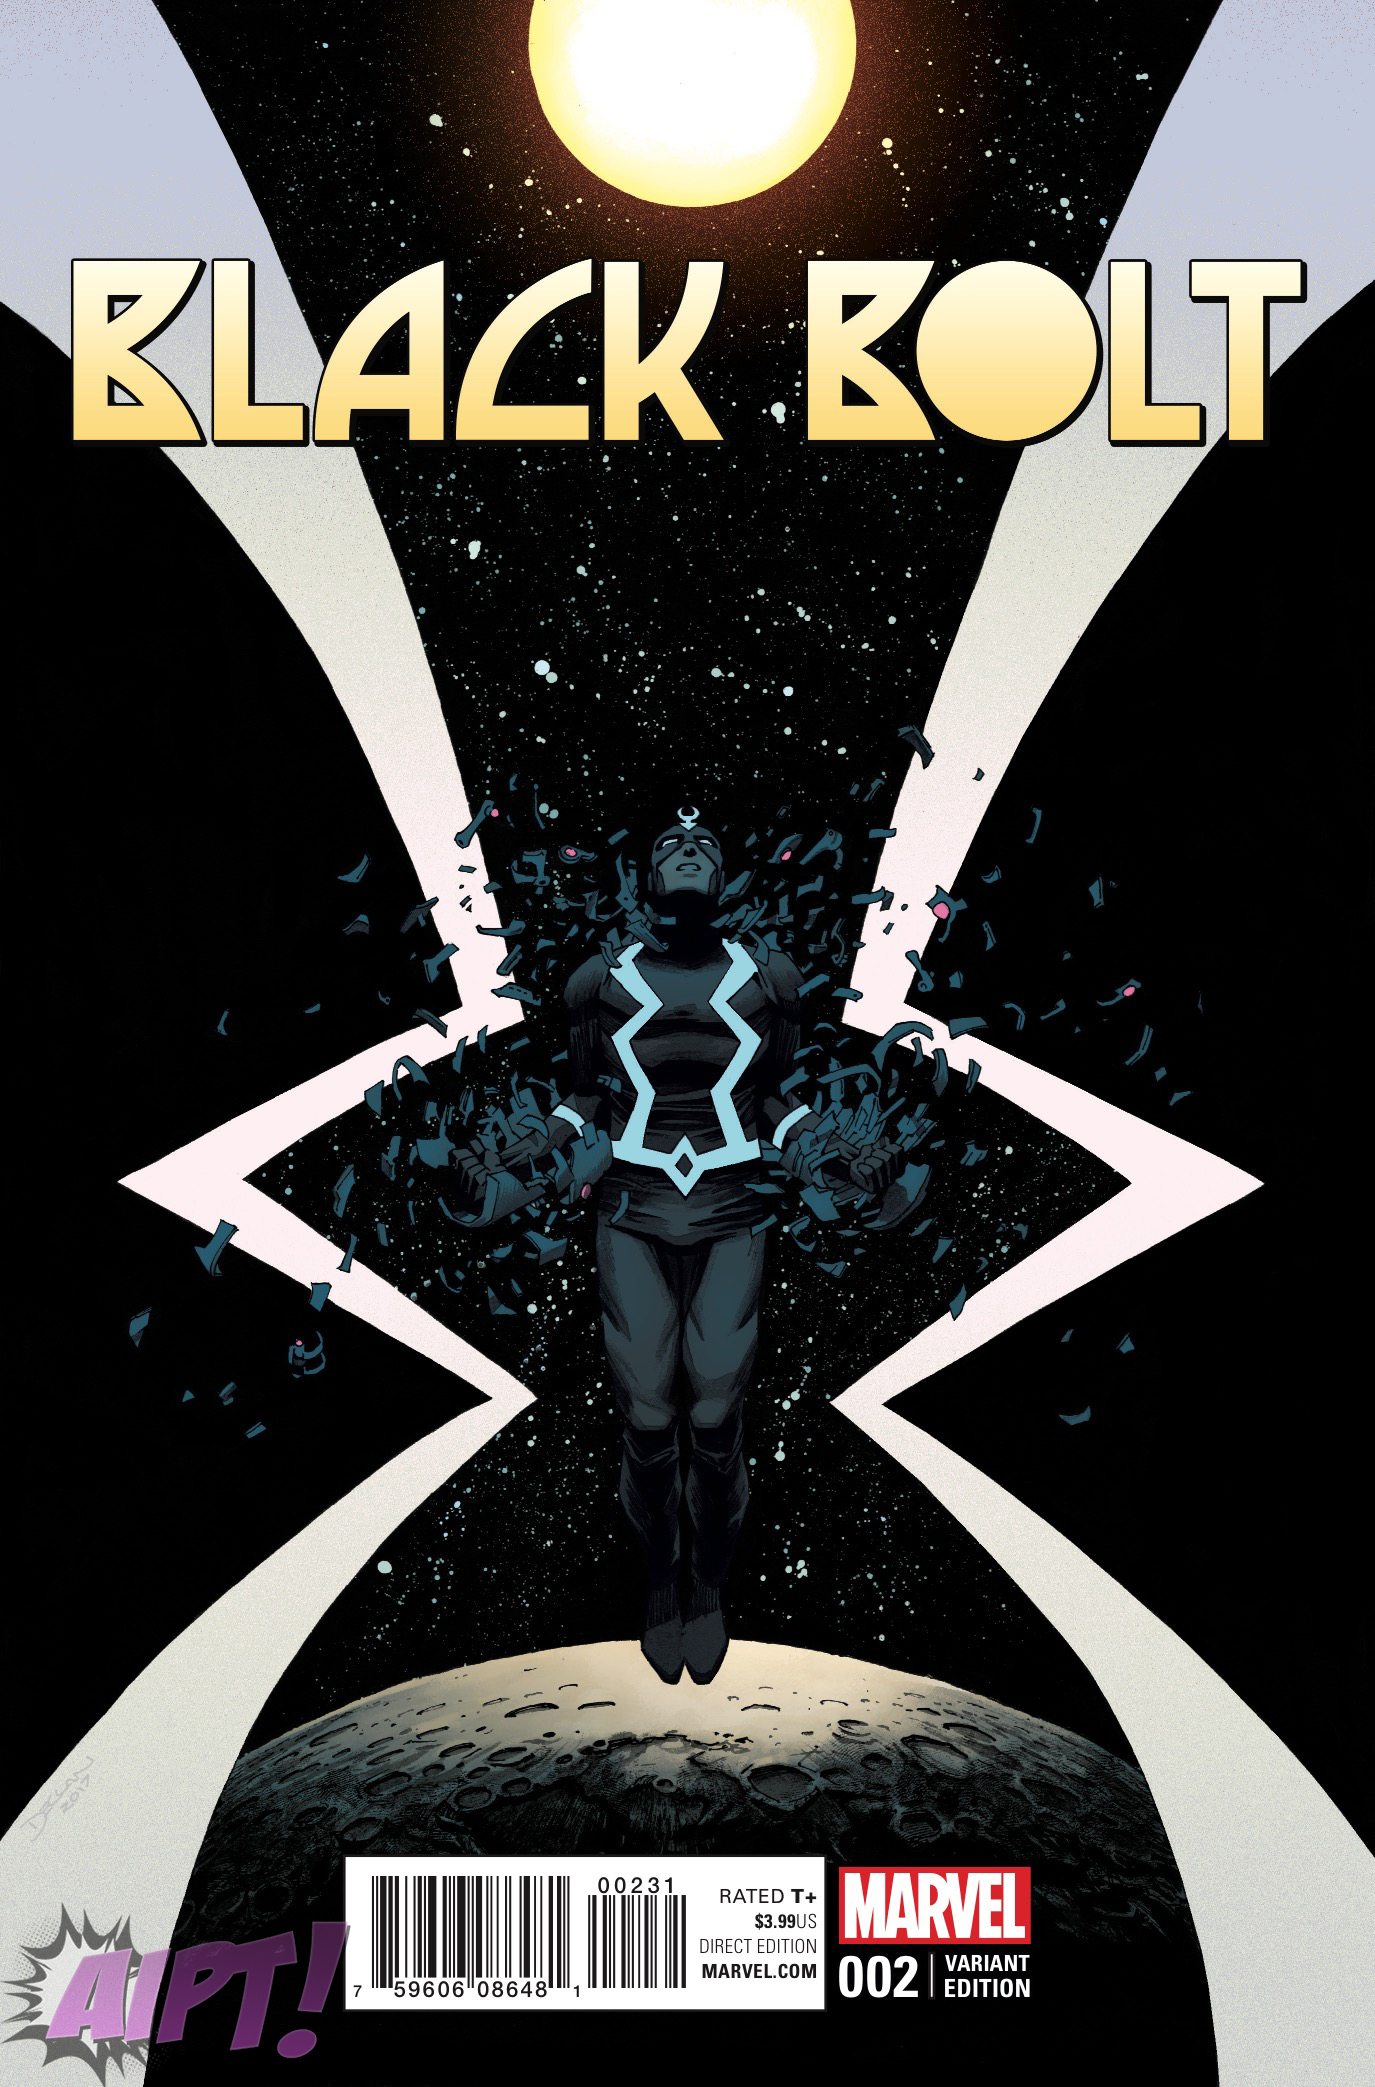 [EXCLUSIVE] Marvel Preview: Black Bolt #2